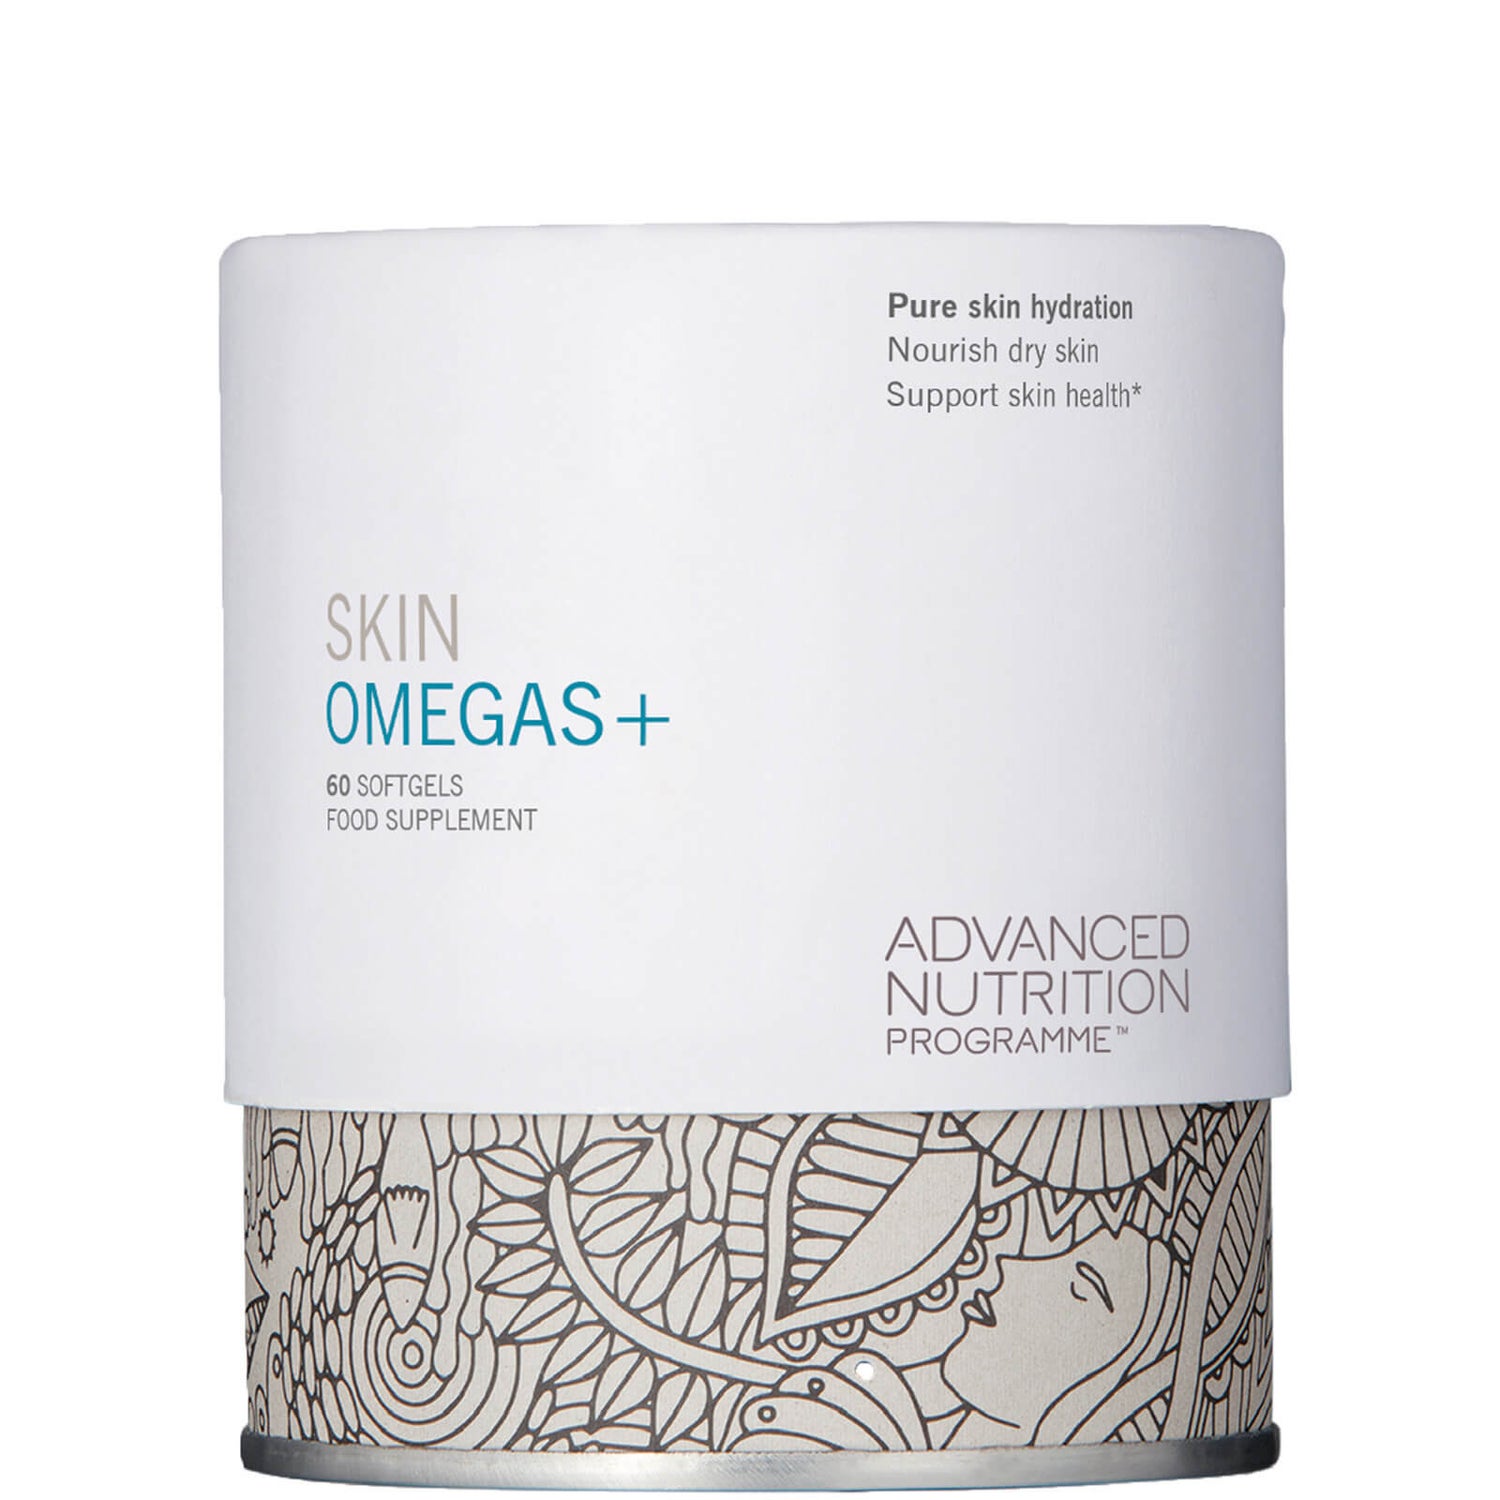 Advanced Nutrition Programme™ Skin Omegas+